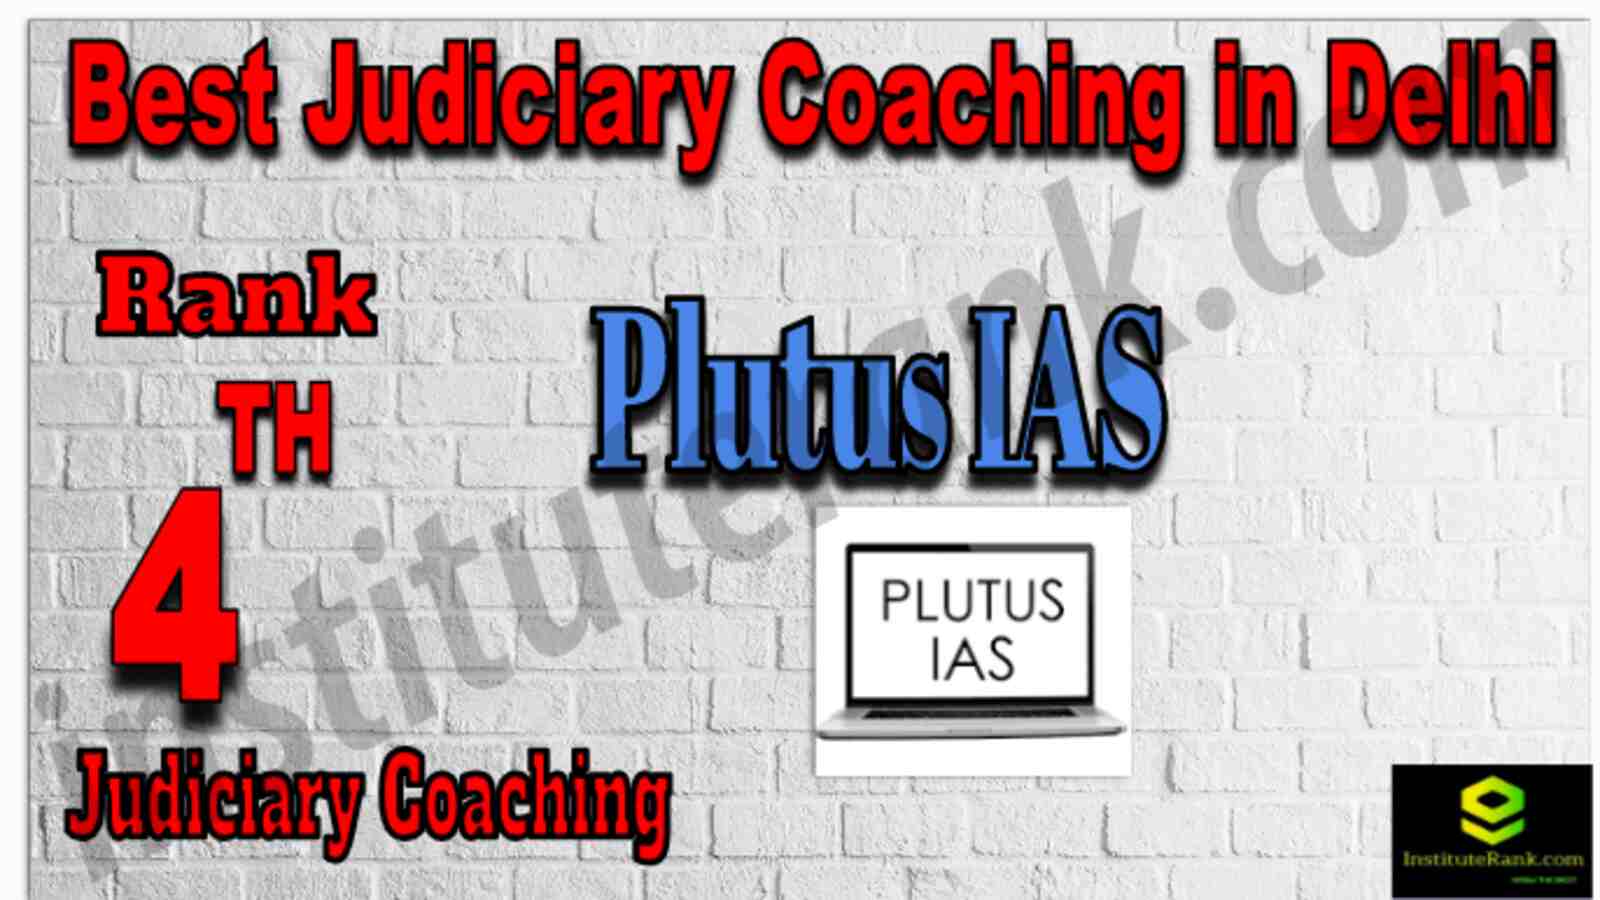 Plutus IAS Best Judiciary Coaching Center in Delhi, Top Judiciary Coaching in Delhi, Rank 4 Judiciary Coaching in Delhi 